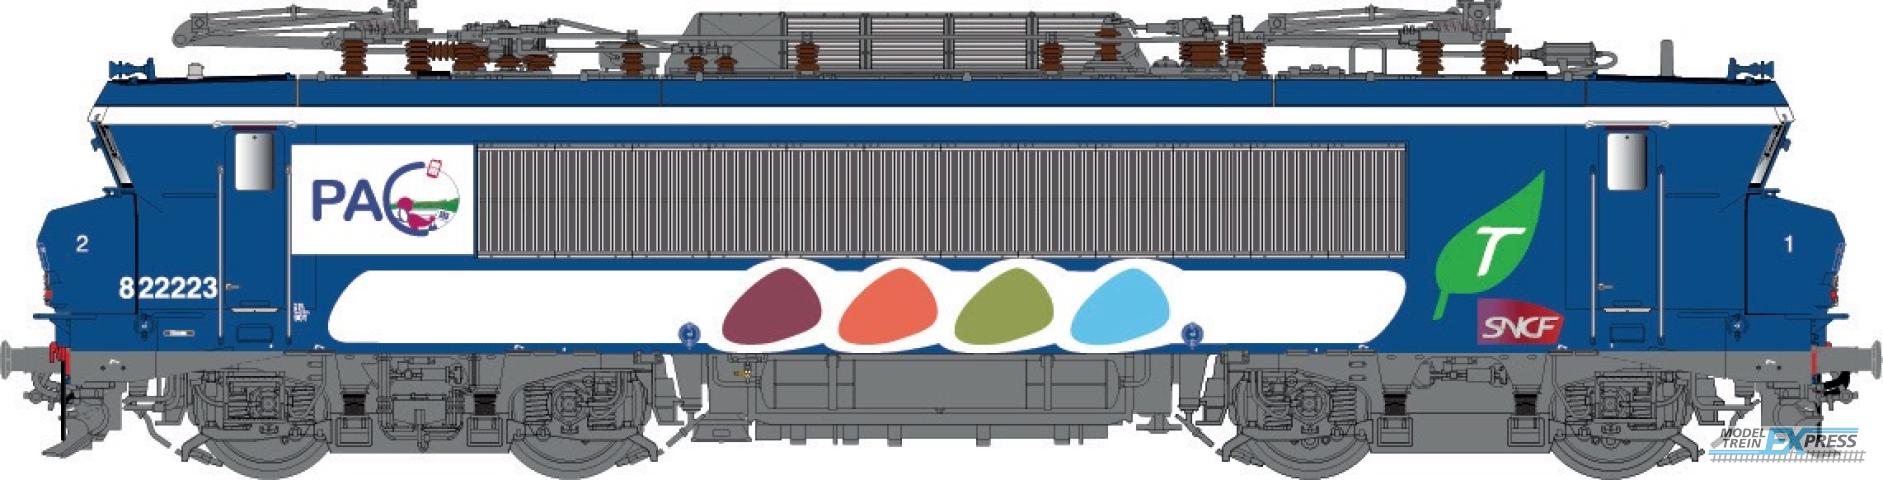 LS Models 11055S BB 22223, blauw, carmillon logo, Transilien, front nummer, kleine cabine  /  Ep. VI  /  SNCF  /  HO  /  DC SOUND  /  1 P.